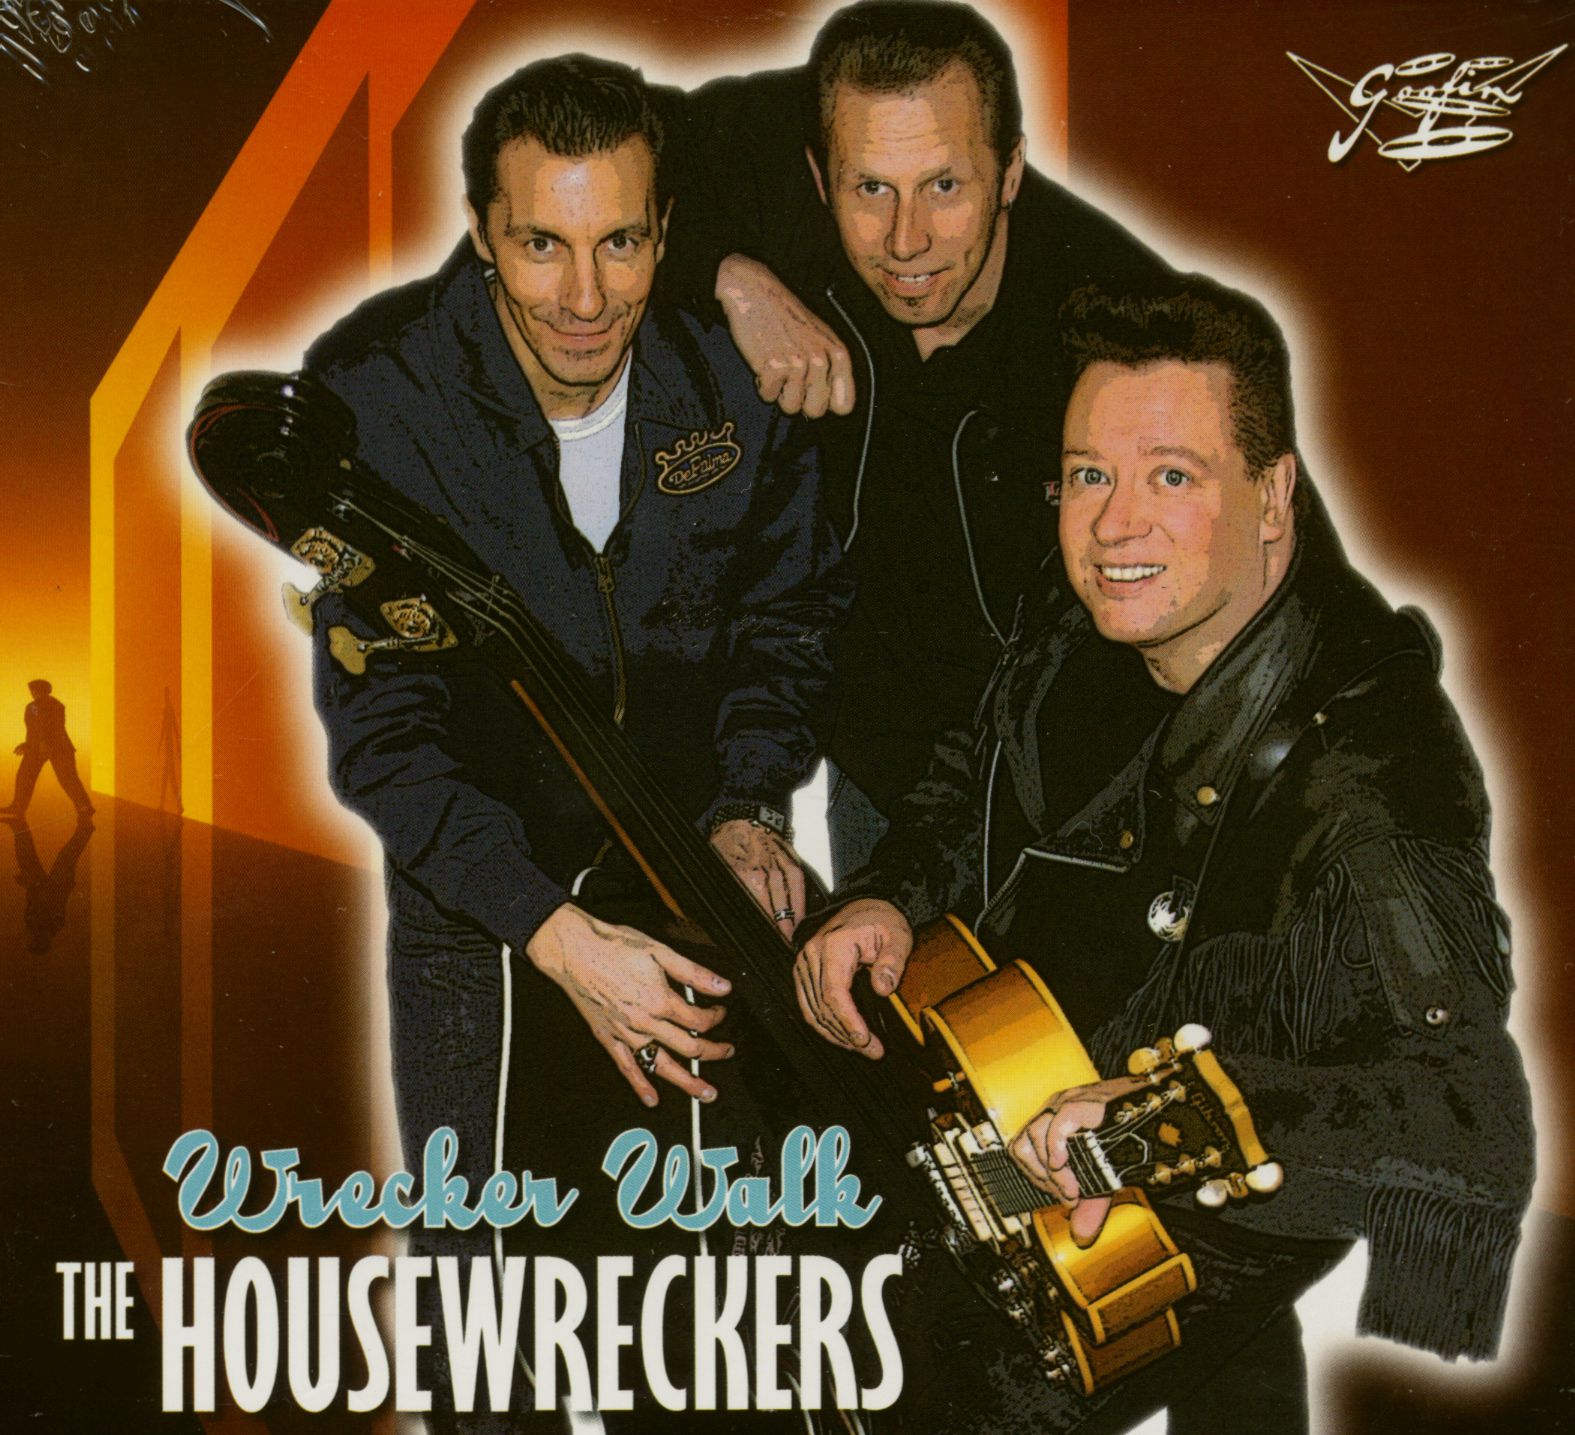 Housewreckers, The - Wrecker Walk (Digipak) - CD